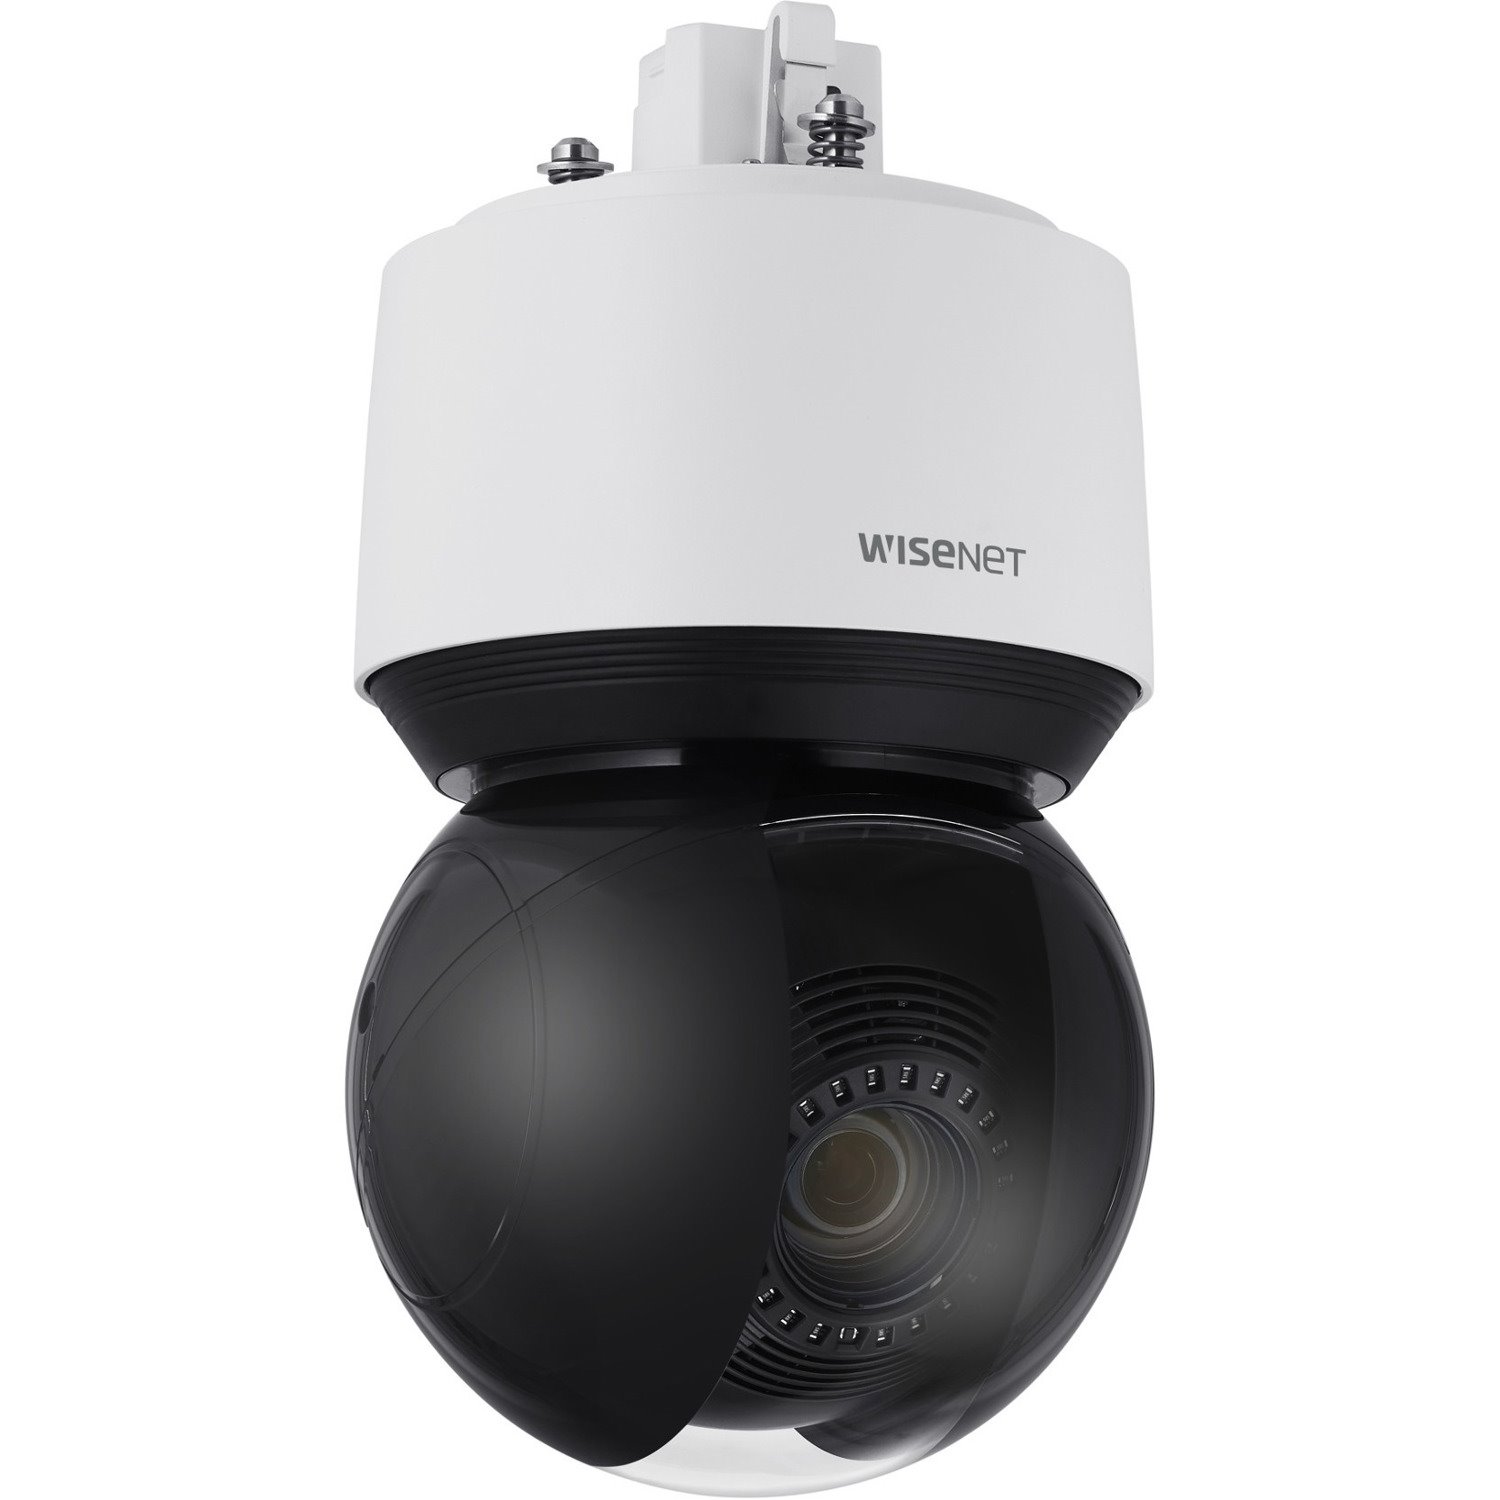 Wisenet XNP-6400 2 Megapixel Outdoor HD Network Camera - Color - Dome - Signal White, Jet Black